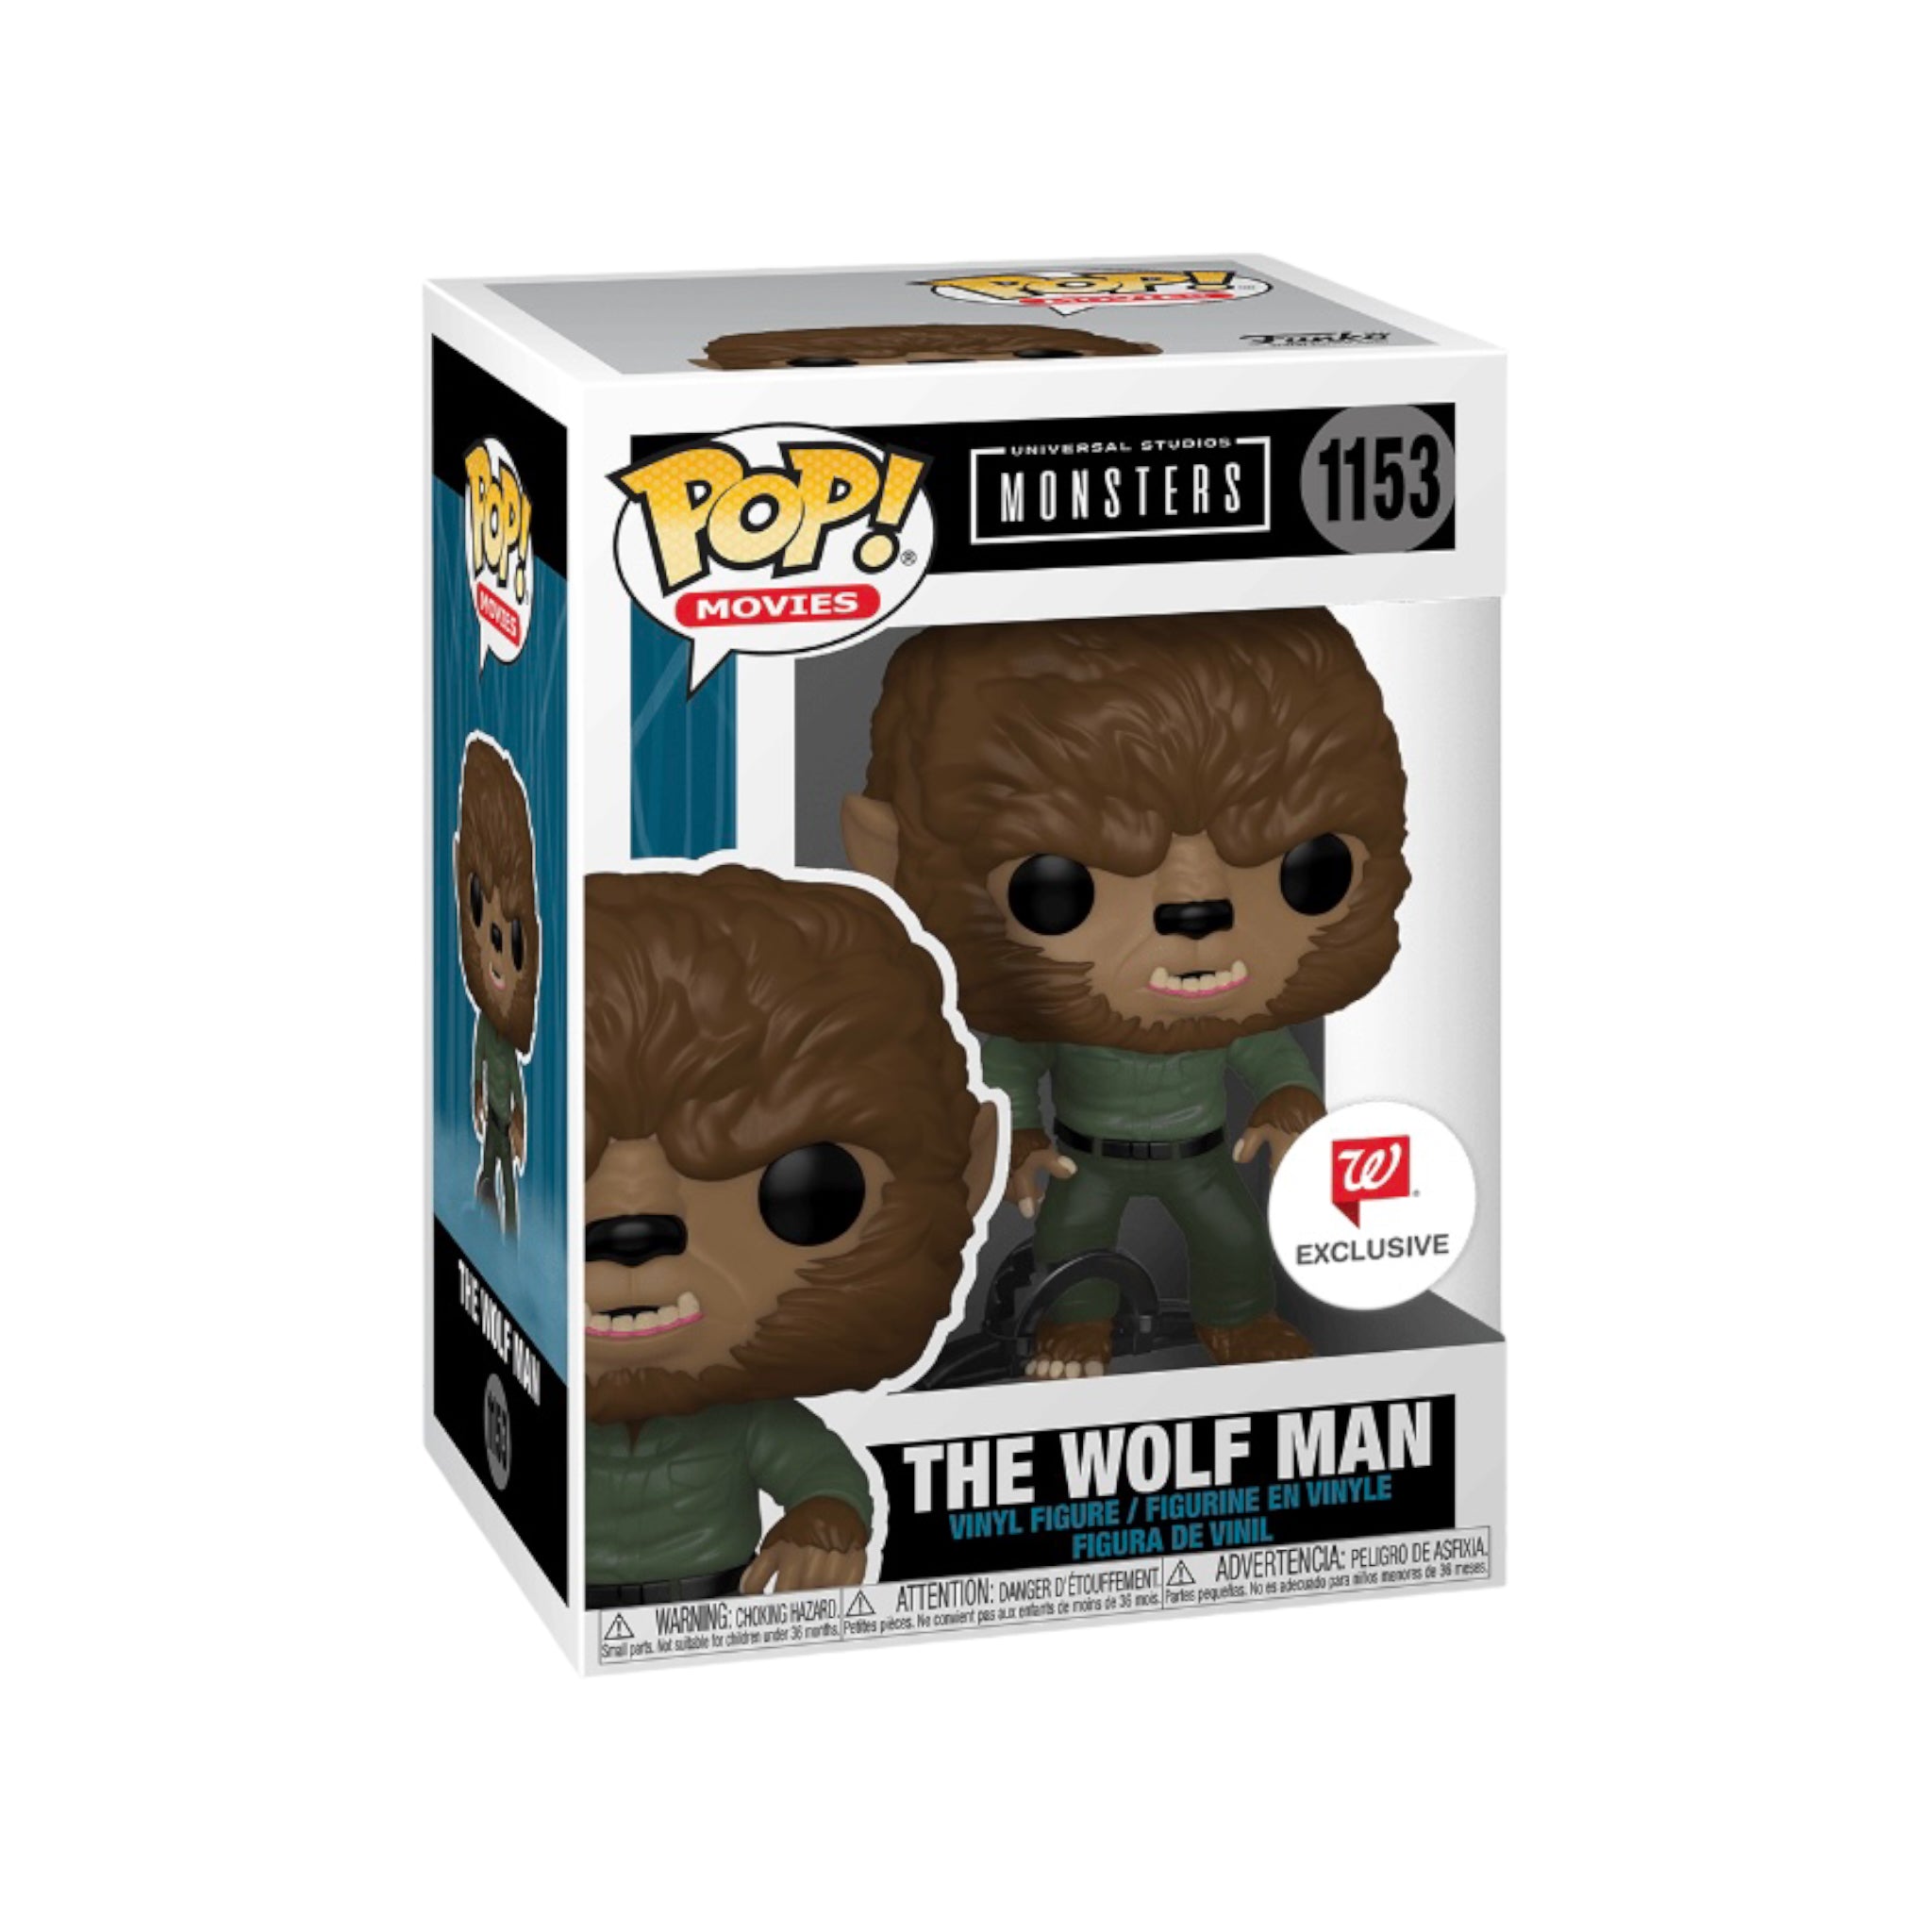 The Wolf Man #1153 Funko Pop! - Universal Studio's Monsters - Walgreens Exclusive